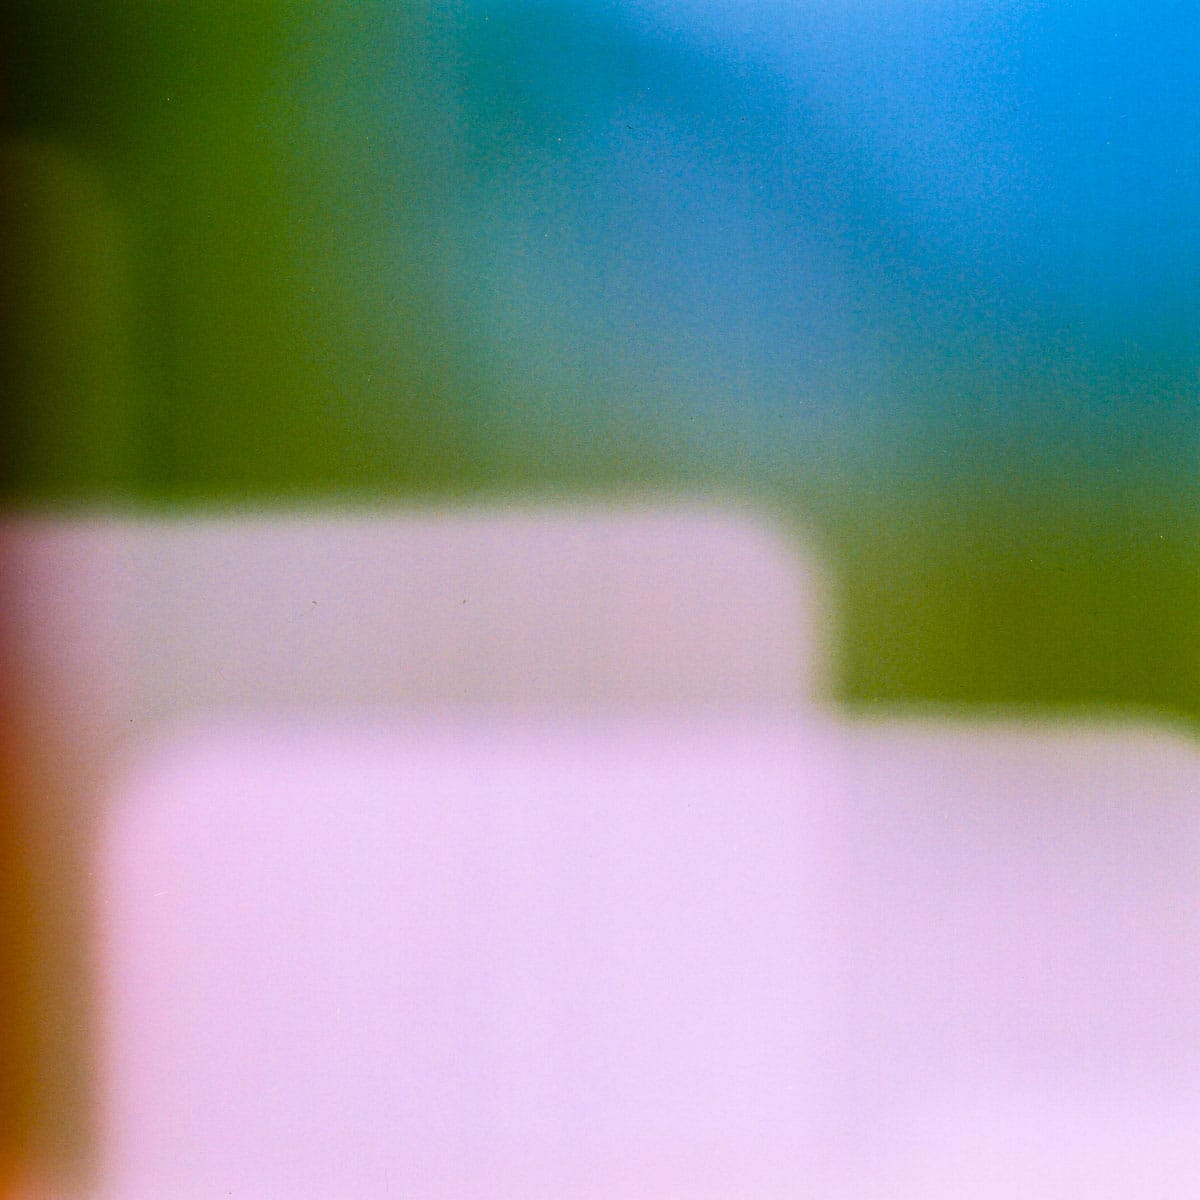 Cubed 02 - Shot on Lomography Color Negative 800 at EI 800 - Color negative film in 120 format as 6x6